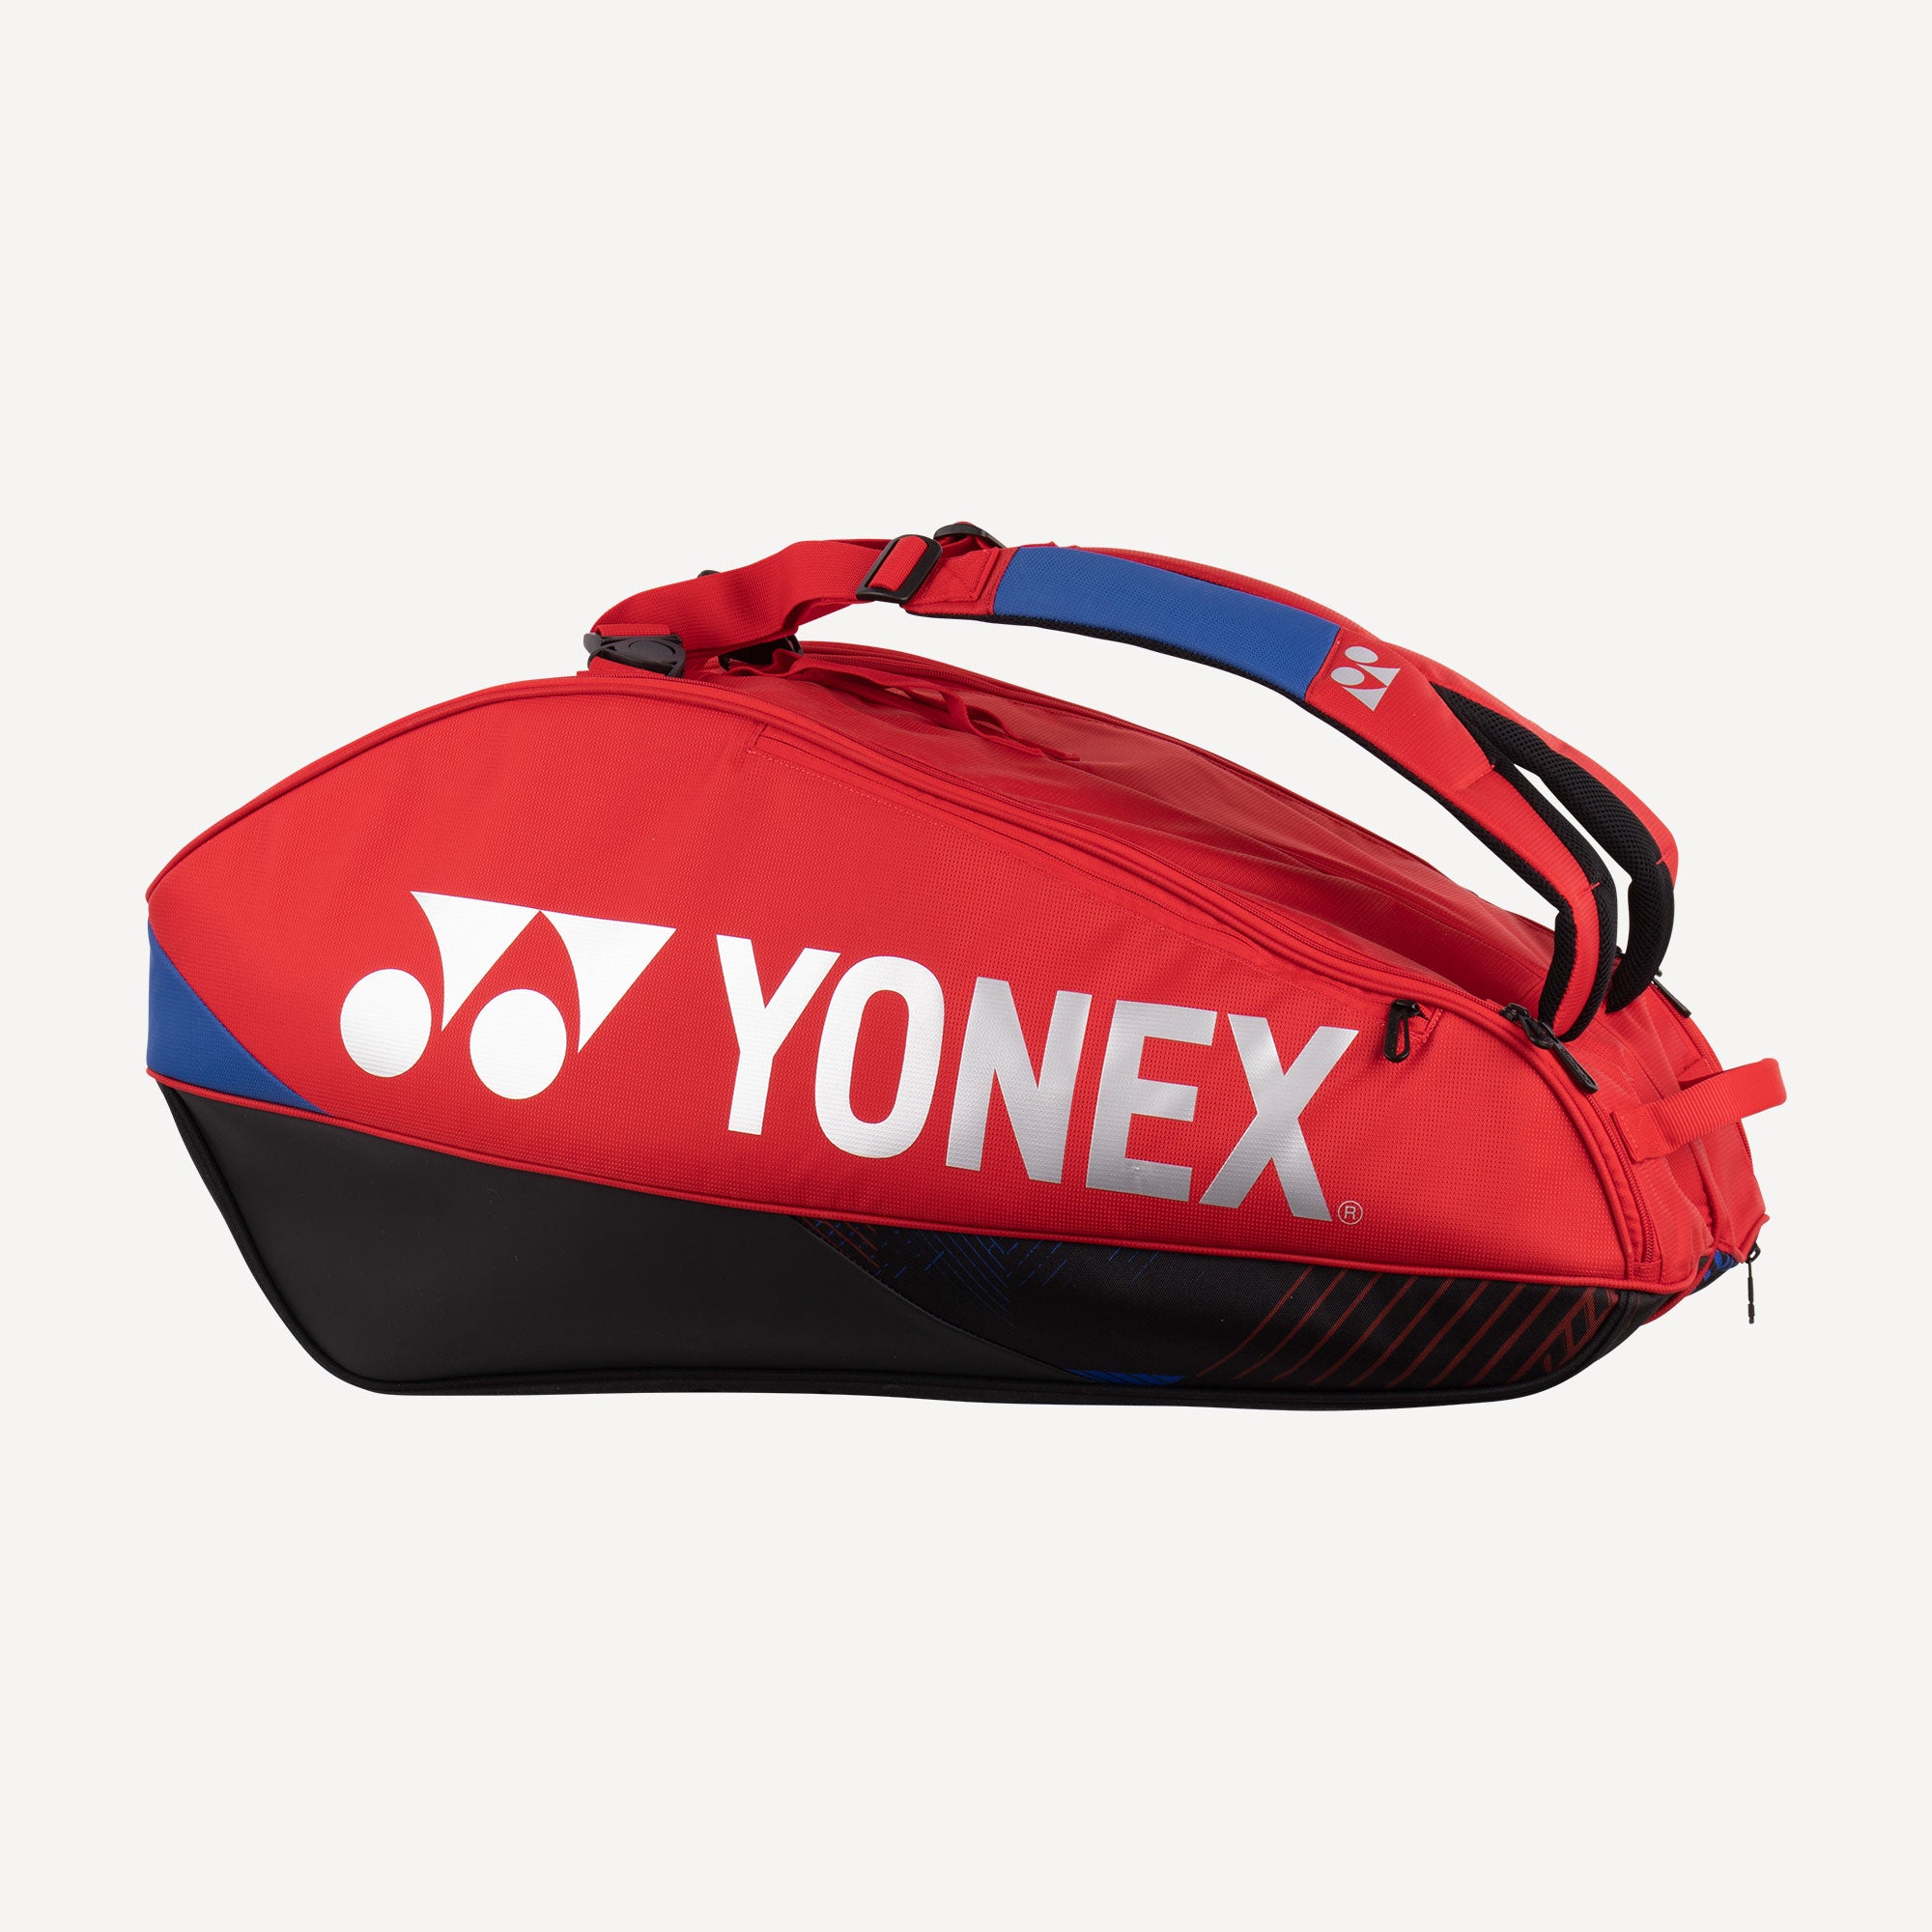 Yonex Pro 6 Racket Tennis Bag - Red (2)